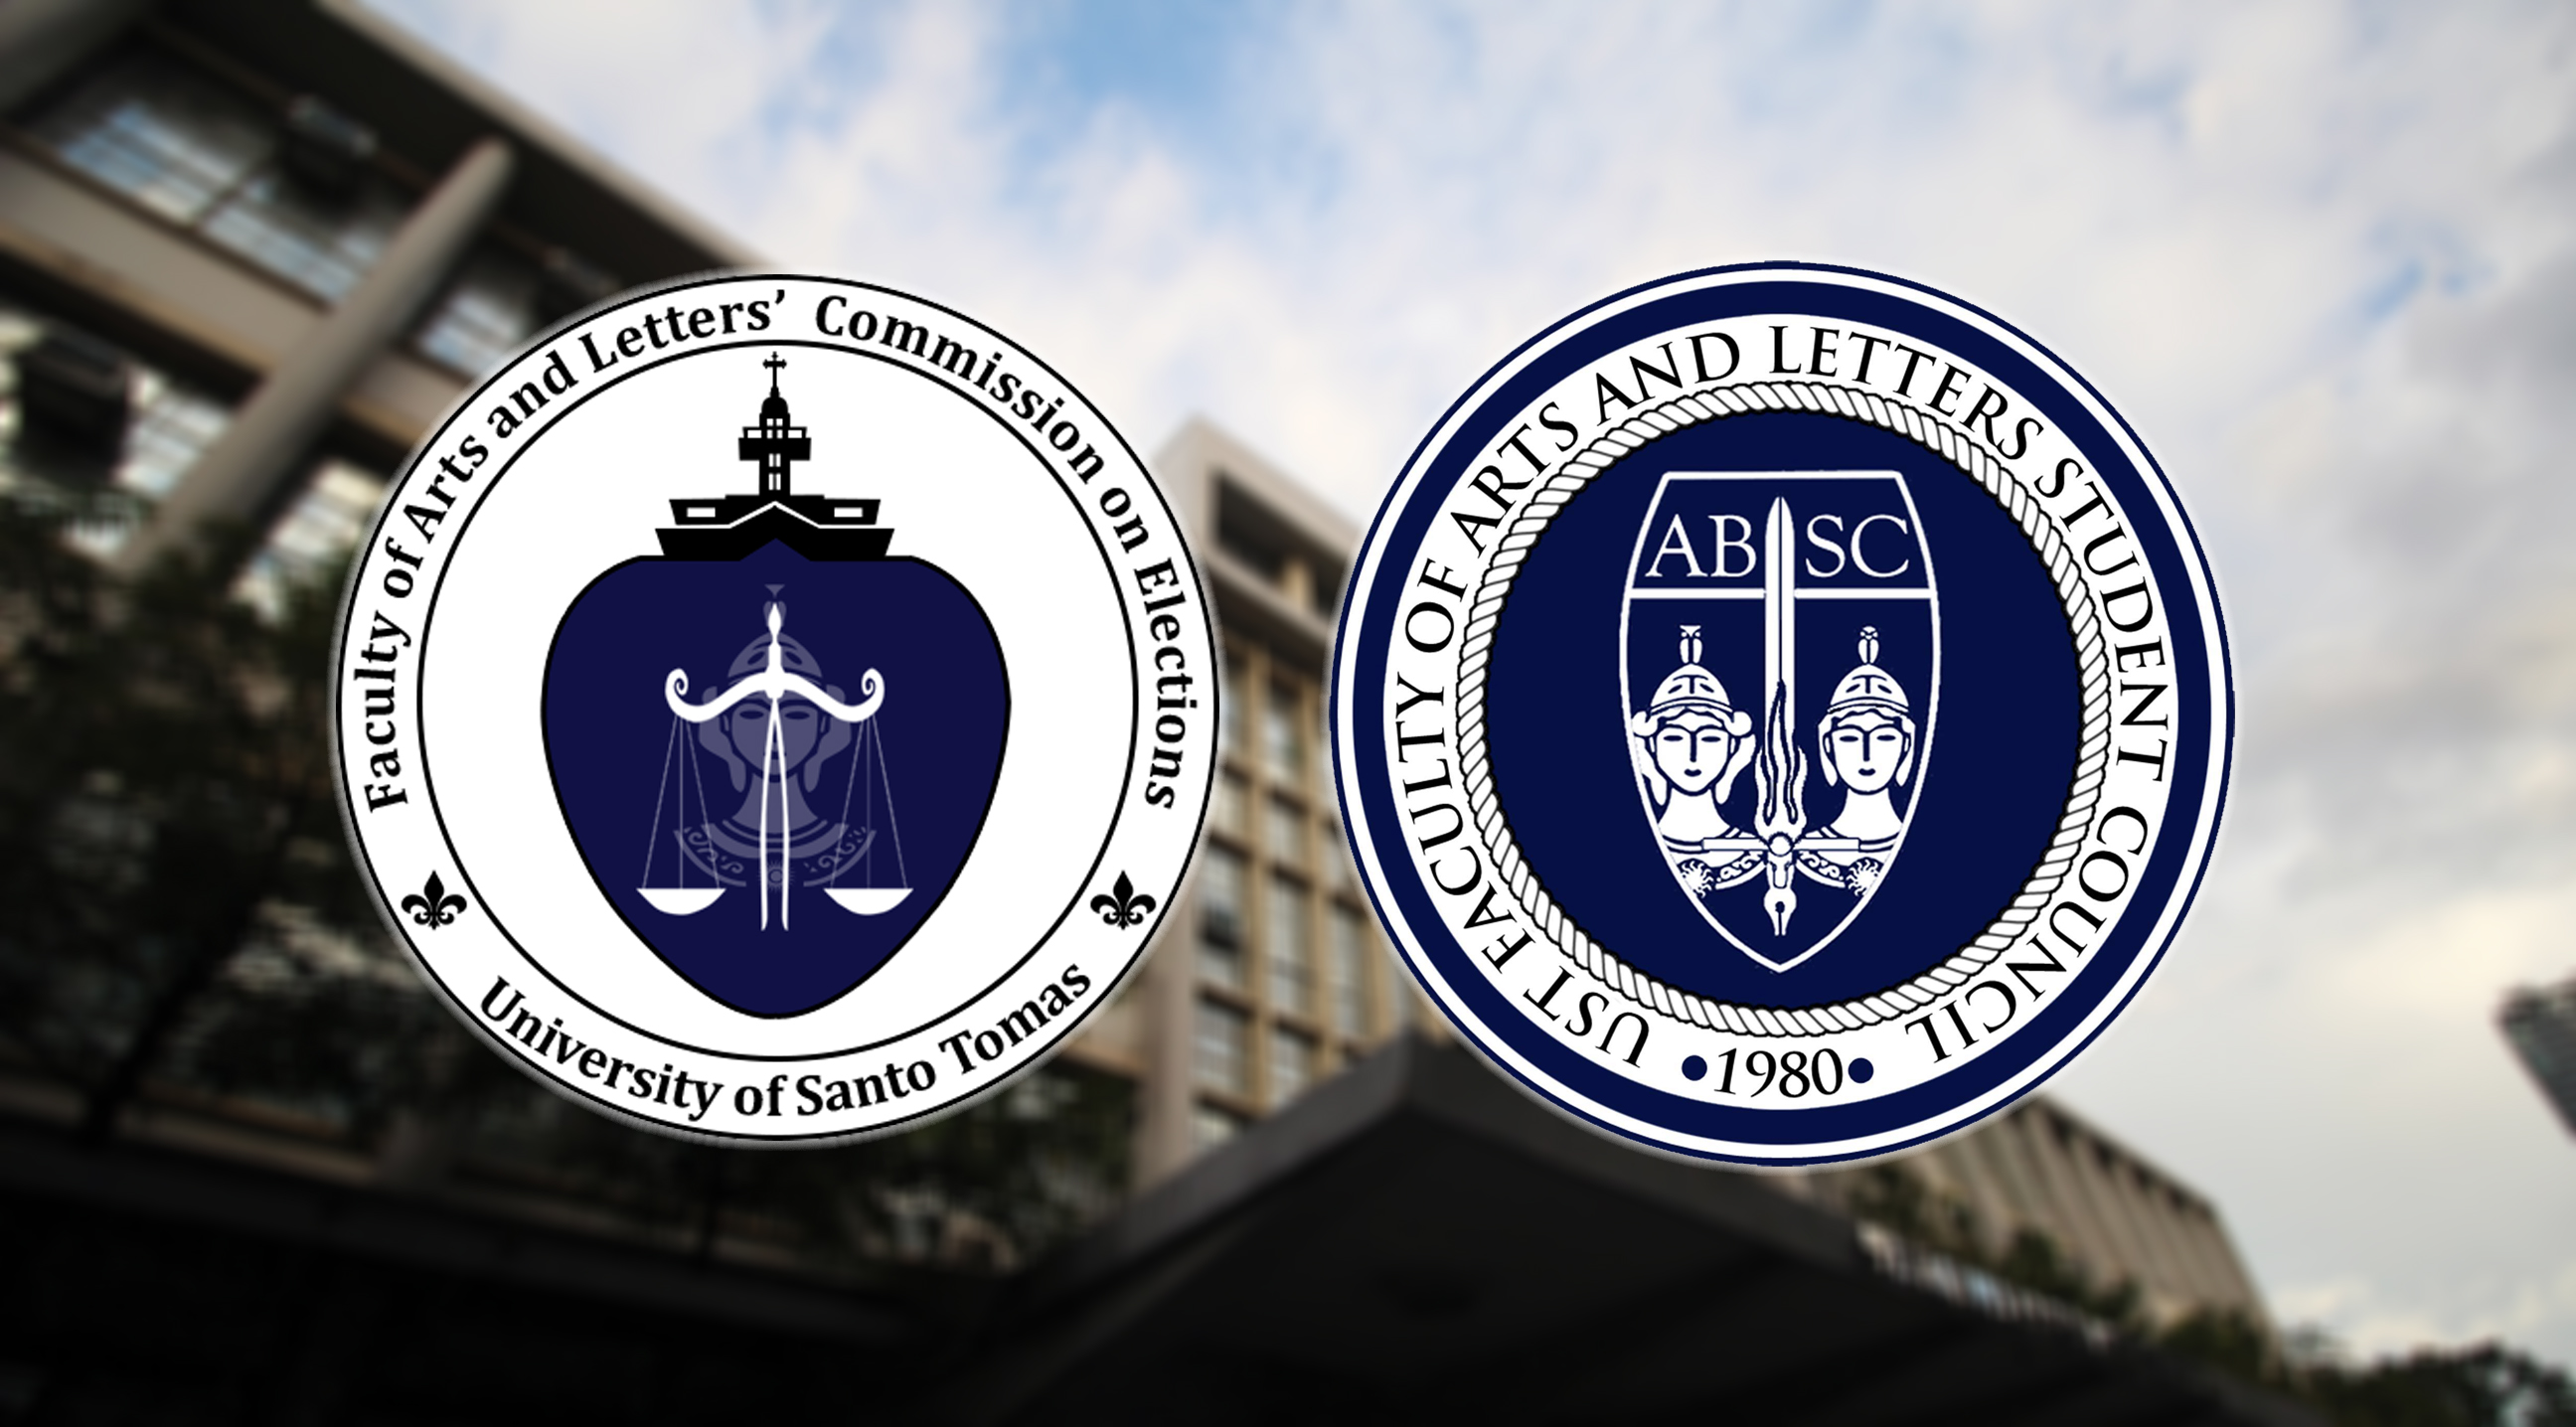 ABSC hopefuls to focus on student welfare, inclusivity amid pandemic